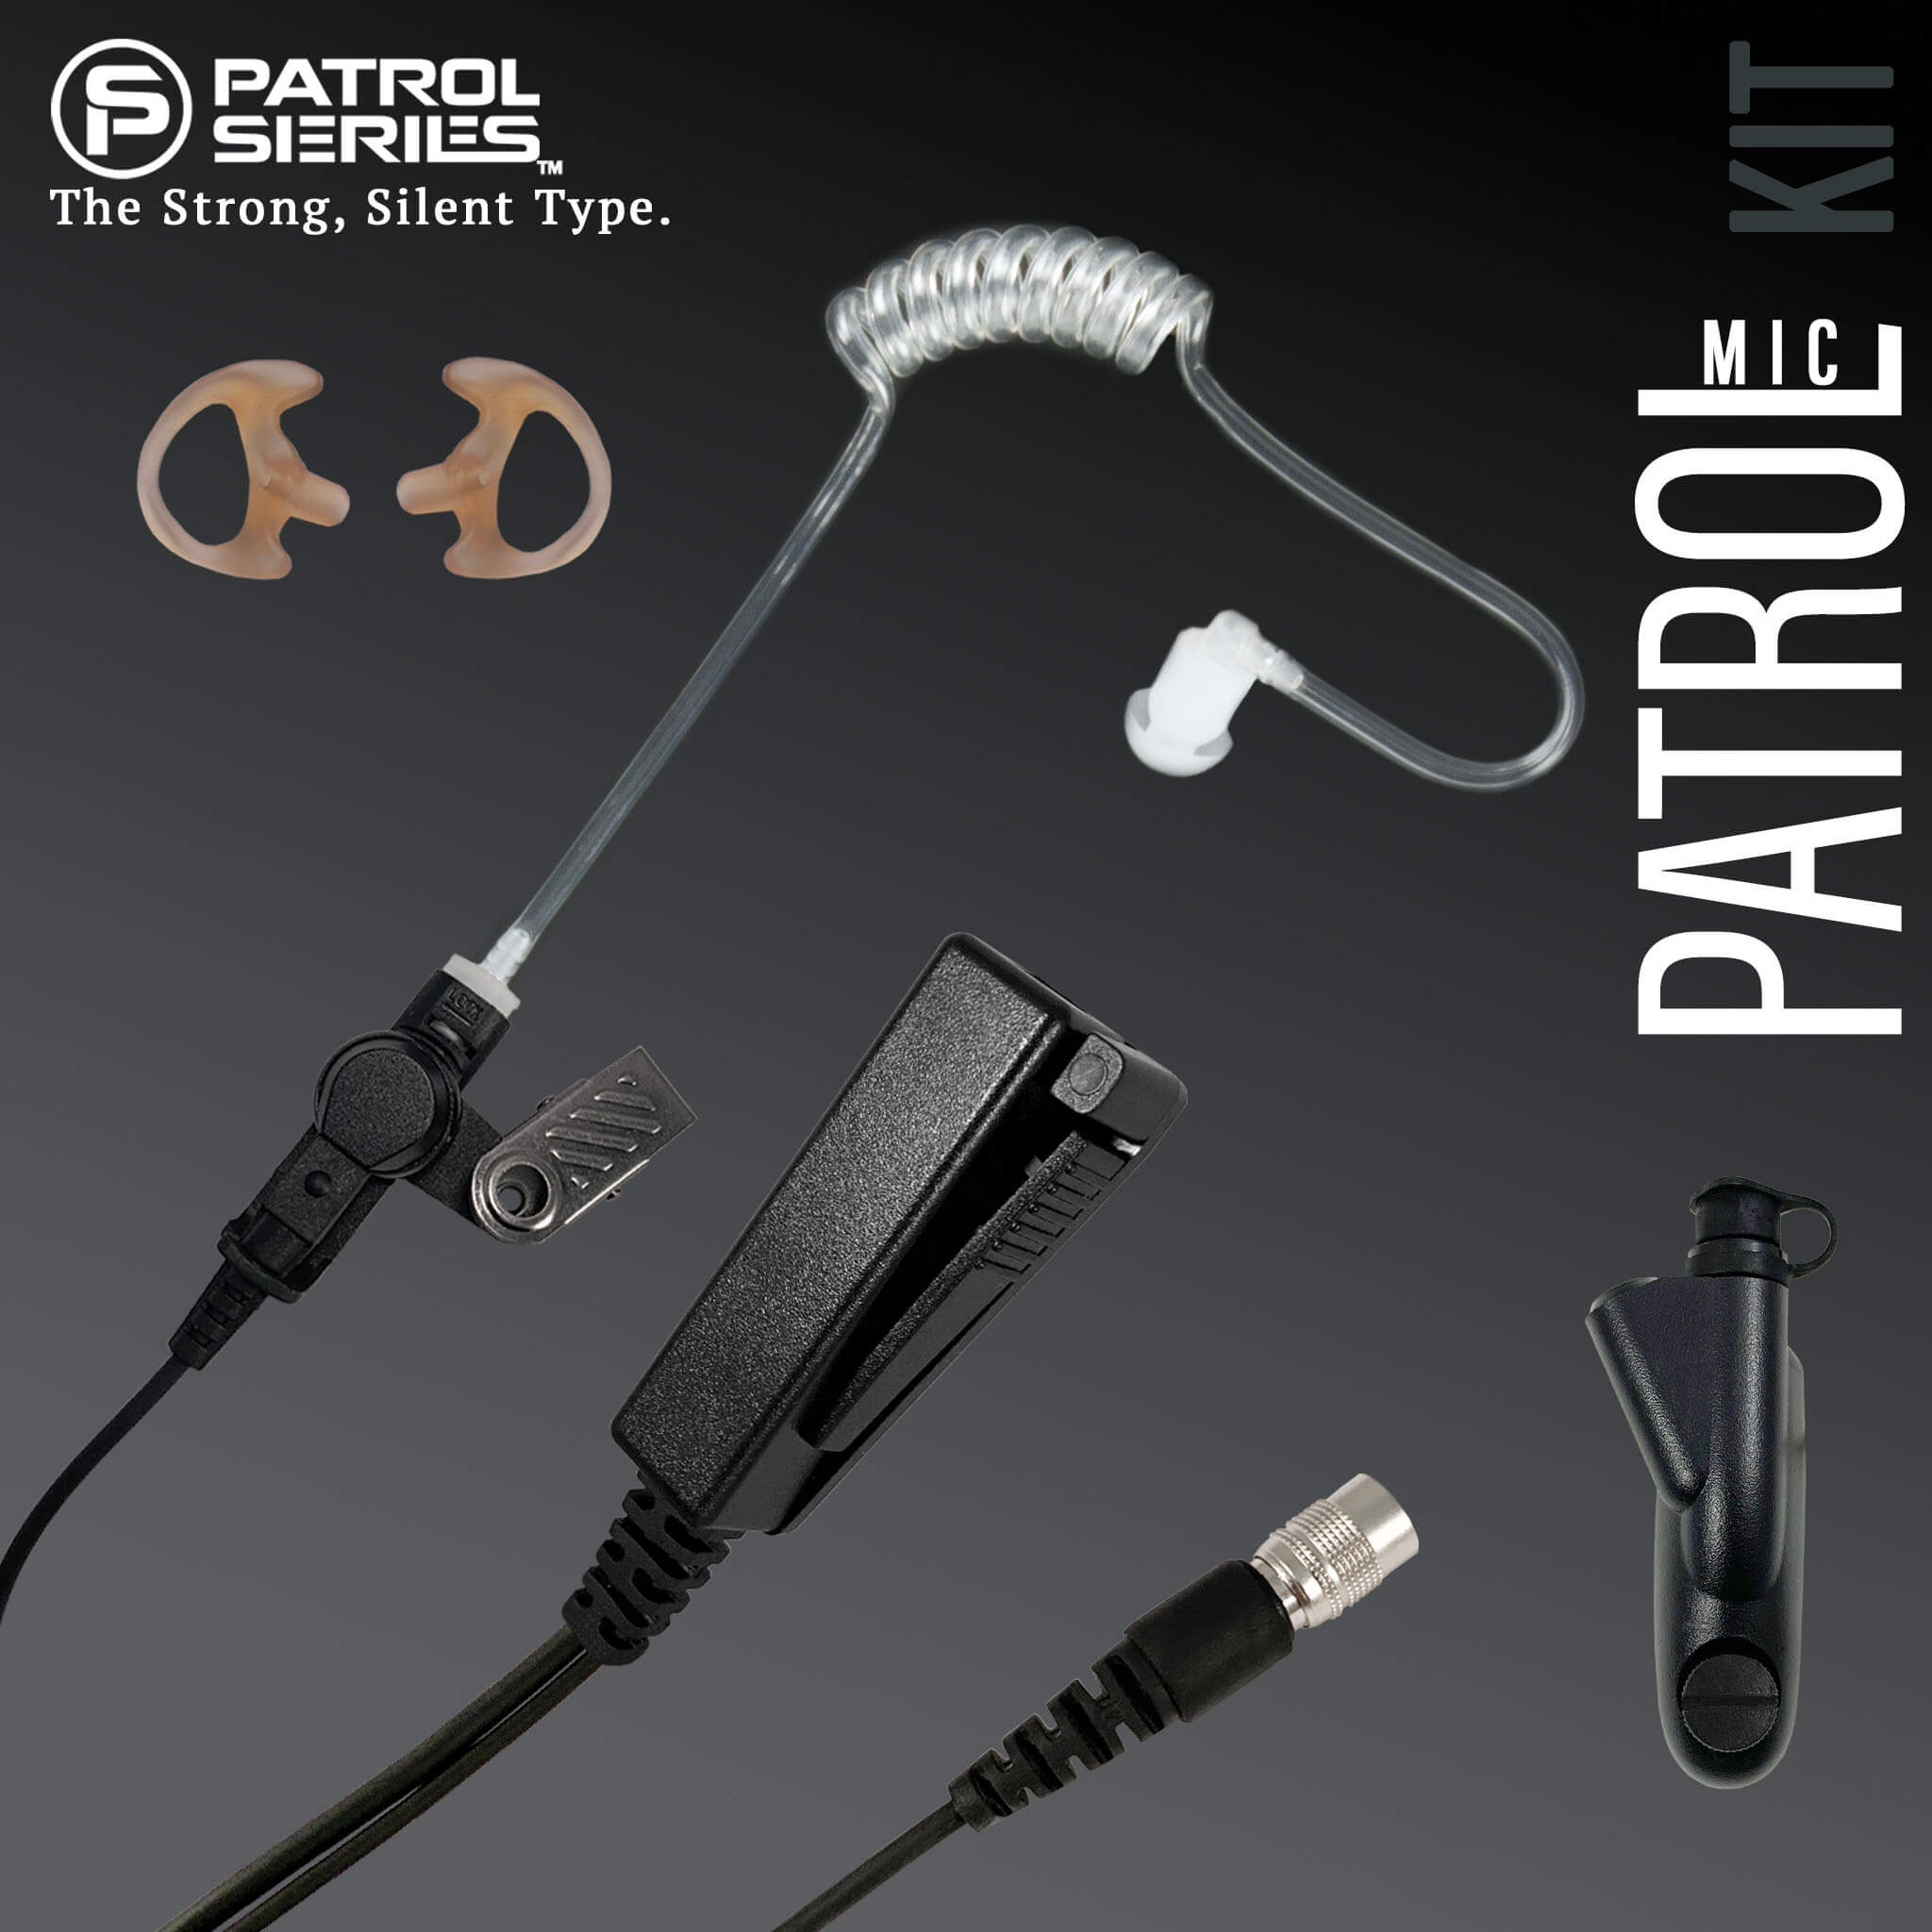 Patrol Mic Kit: PM33RR - Guaranteed to work w/: Motorola- HT750, HT1250, HT1550, MTX850, MTX950, MTX8250, MTX9250, PR860, & More